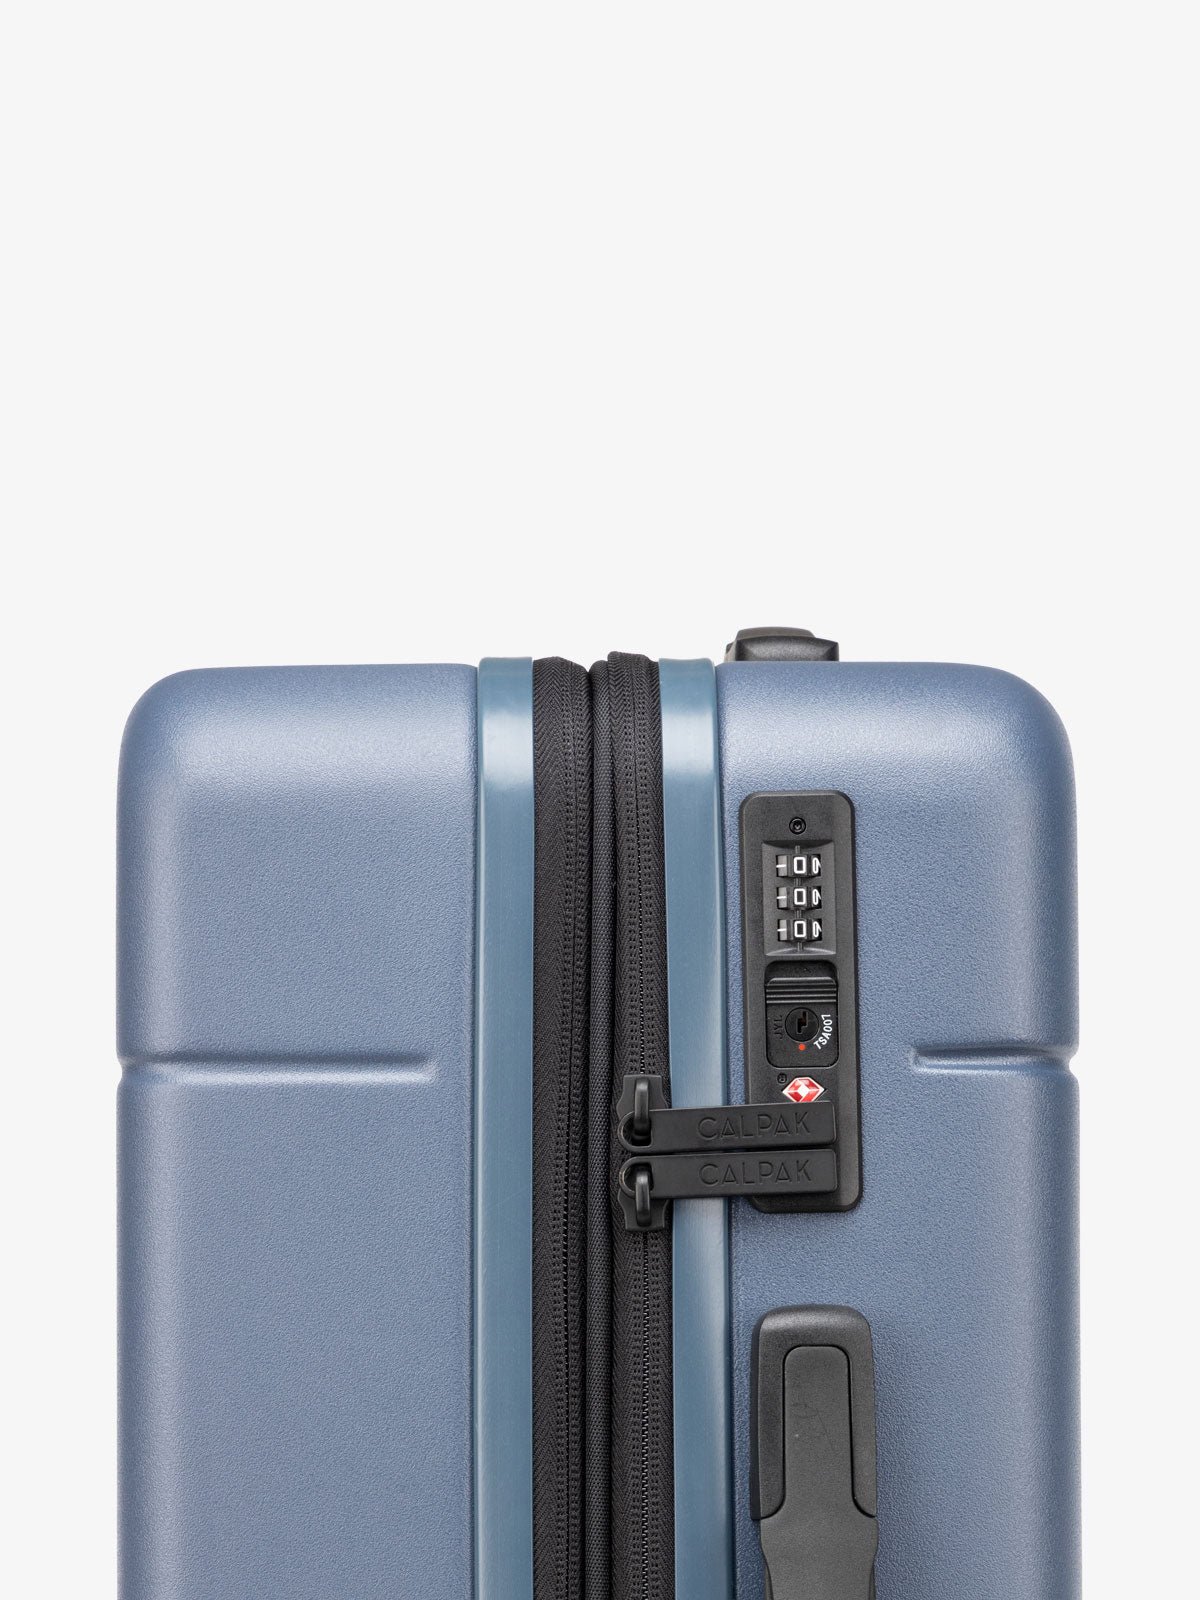 CALPAK Hue 31 inch hardside trunk suitcase with built in TSA lock in atlantic blue